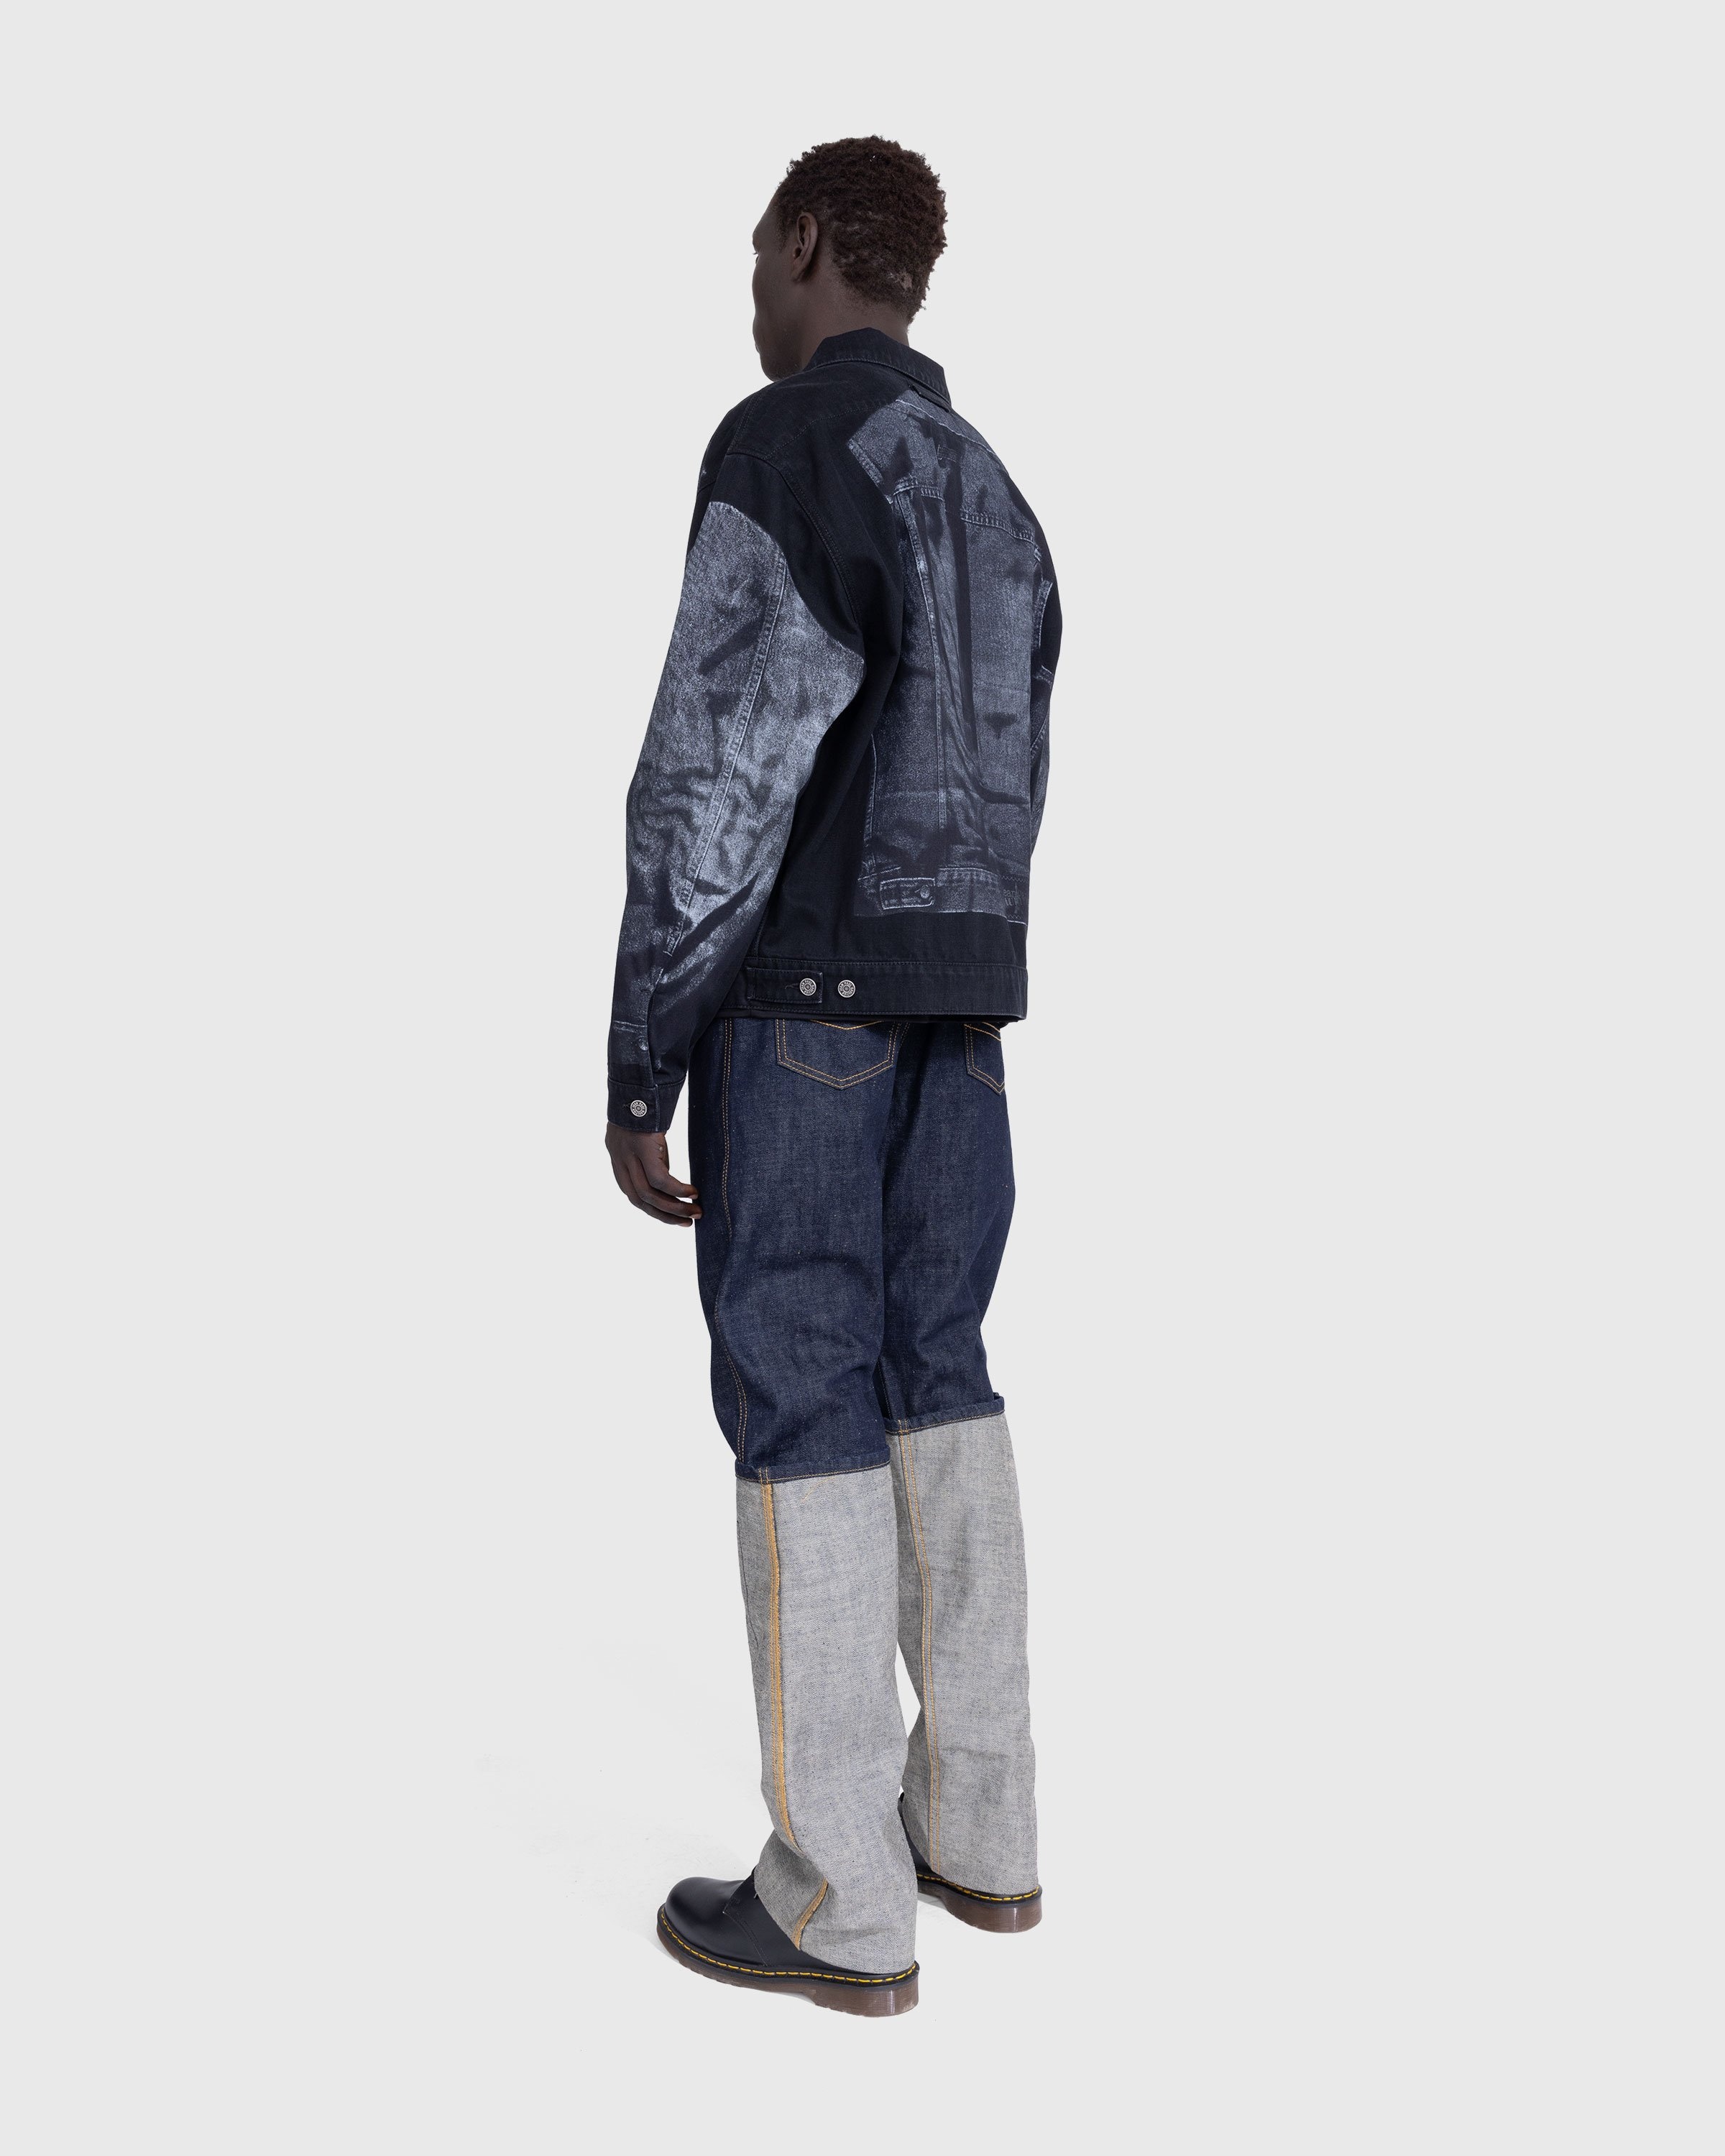 Jean Paul Gaultier – Trompe L'œil Denim Jacket Black